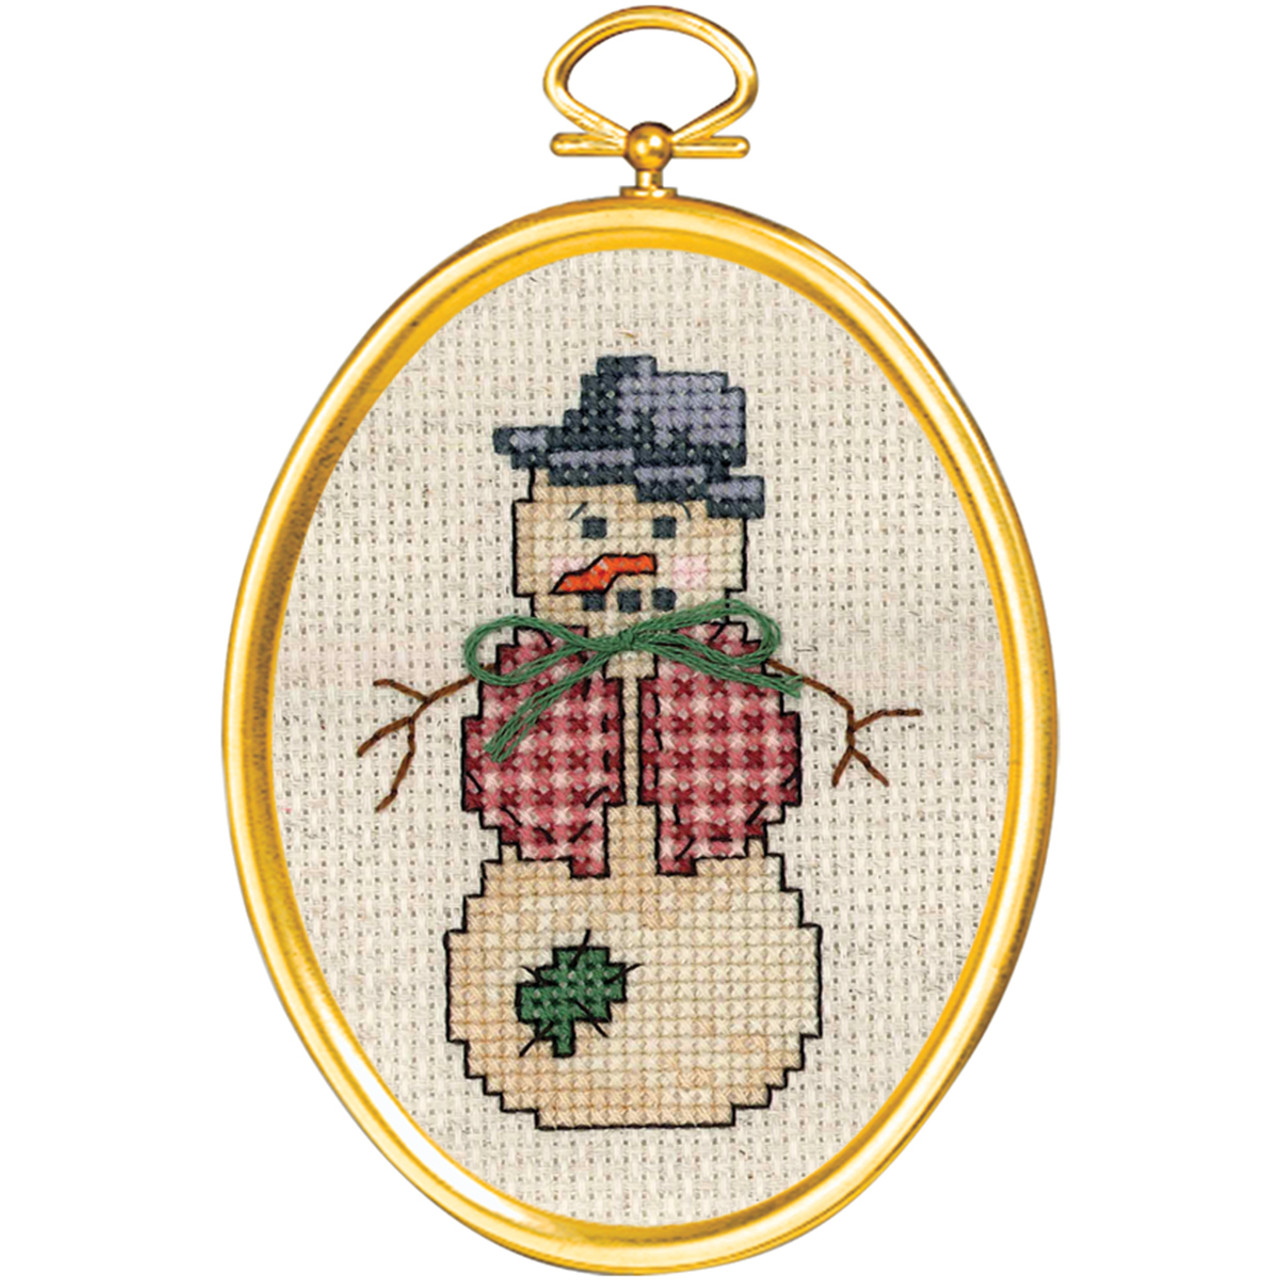 Janlynn Mini Counted Cross Stitch Kit 2.5 Round-Starry Snowman (18